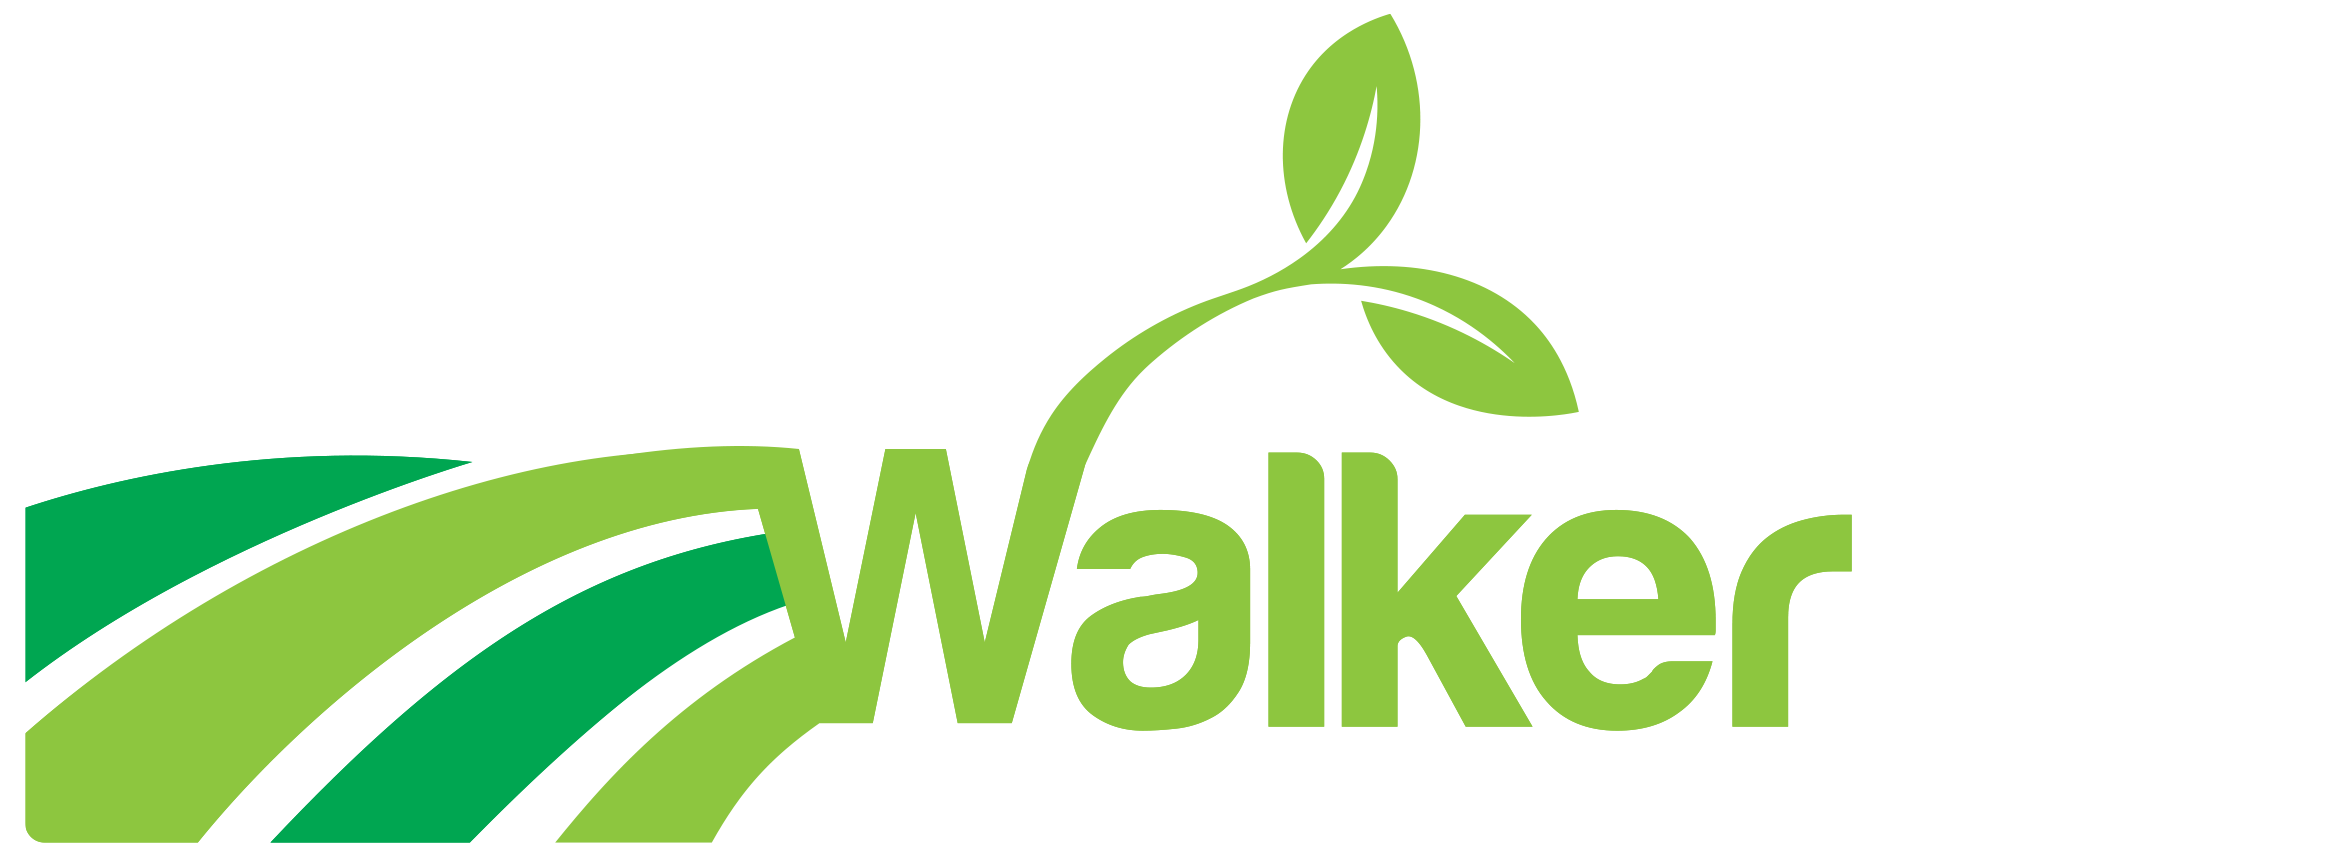 Walker Ag Consultancy Logo